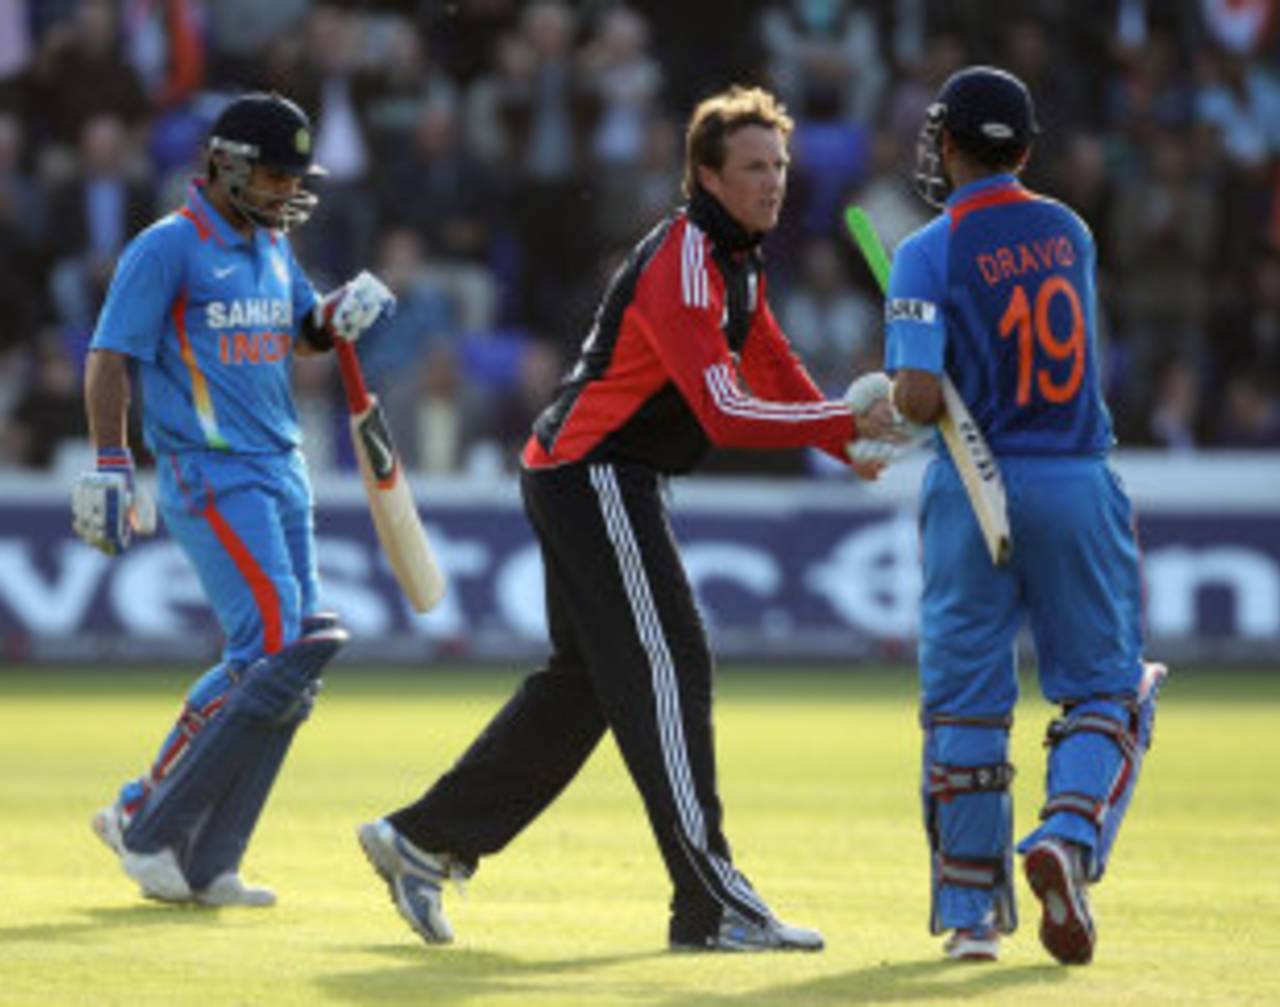 Graeme Swann shakes Rahul Dravid's hand after the batsman's last innings in one-day internationals&nbsp;&nbsp;&bull;&nbsp;&nbsp;Getty Images